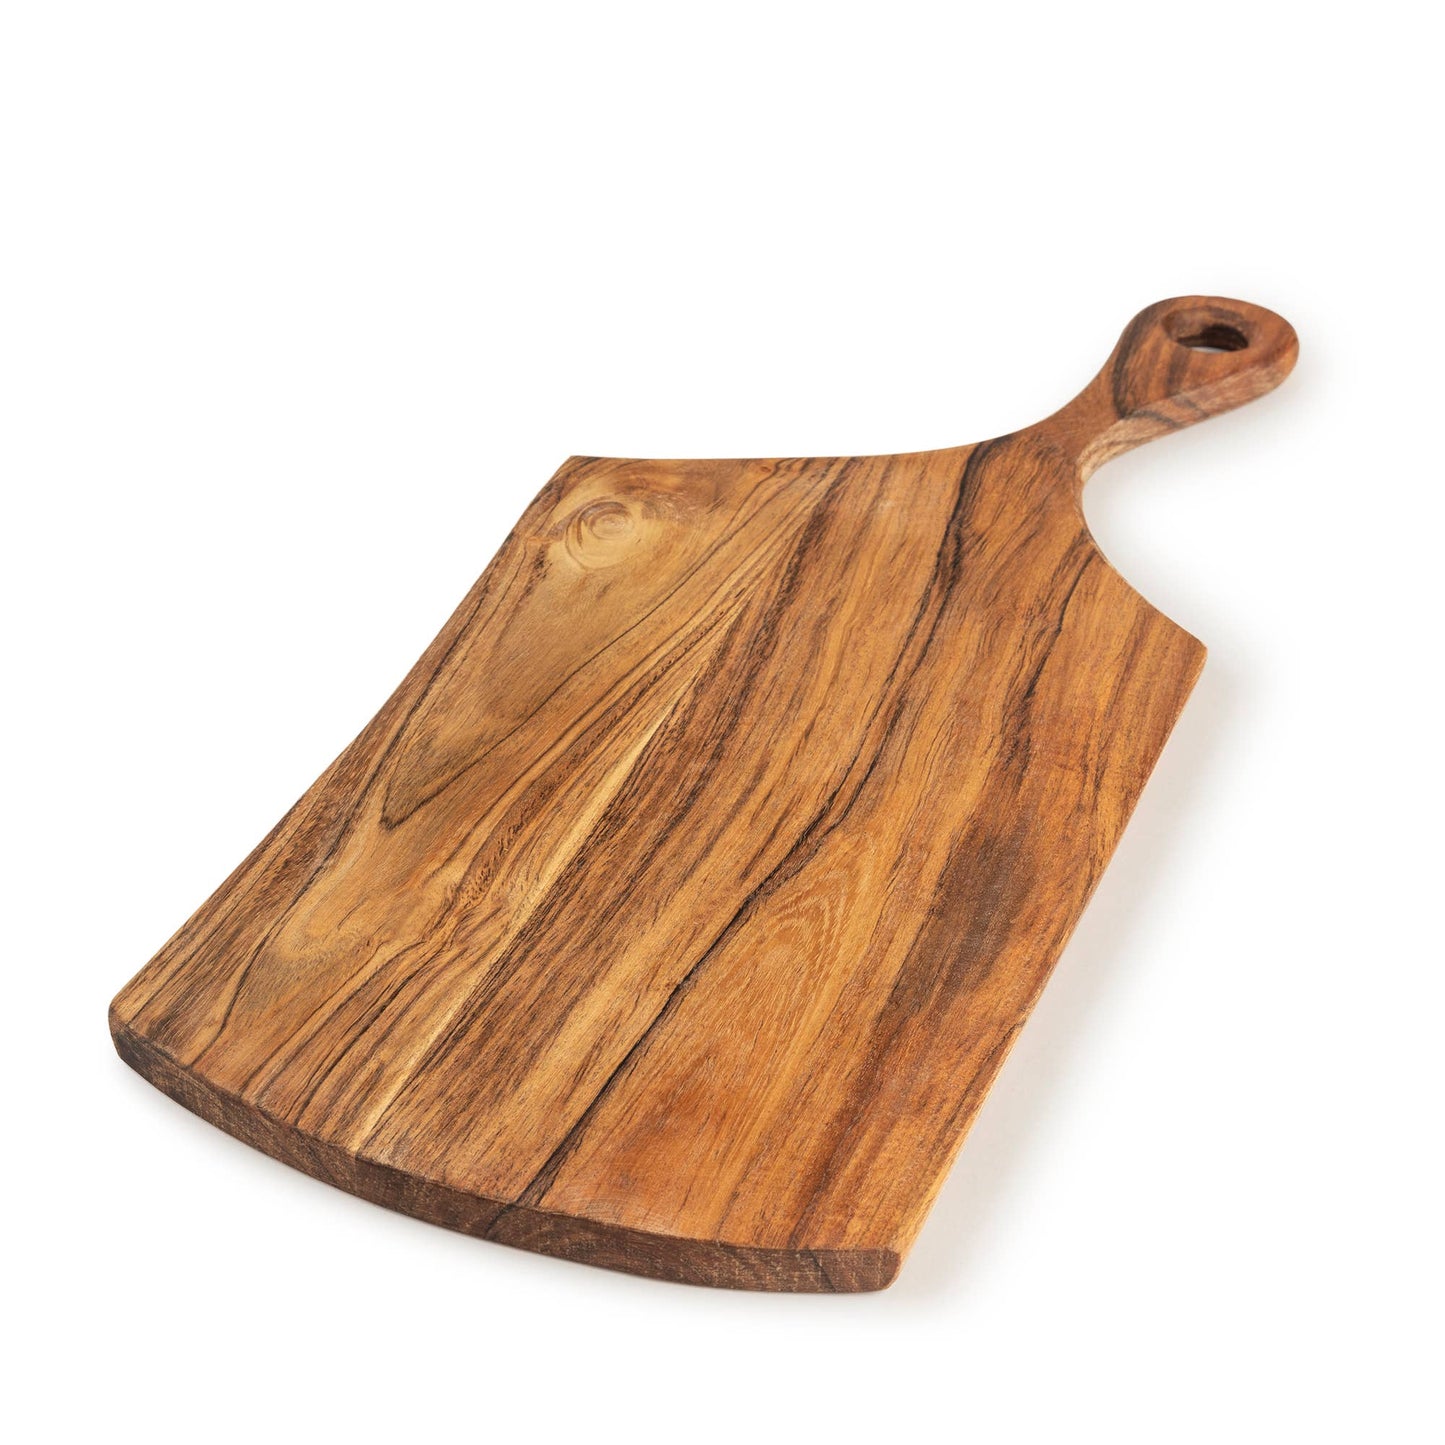 GAURI KOHLI - Hajri Wood Cutting Board, 20"